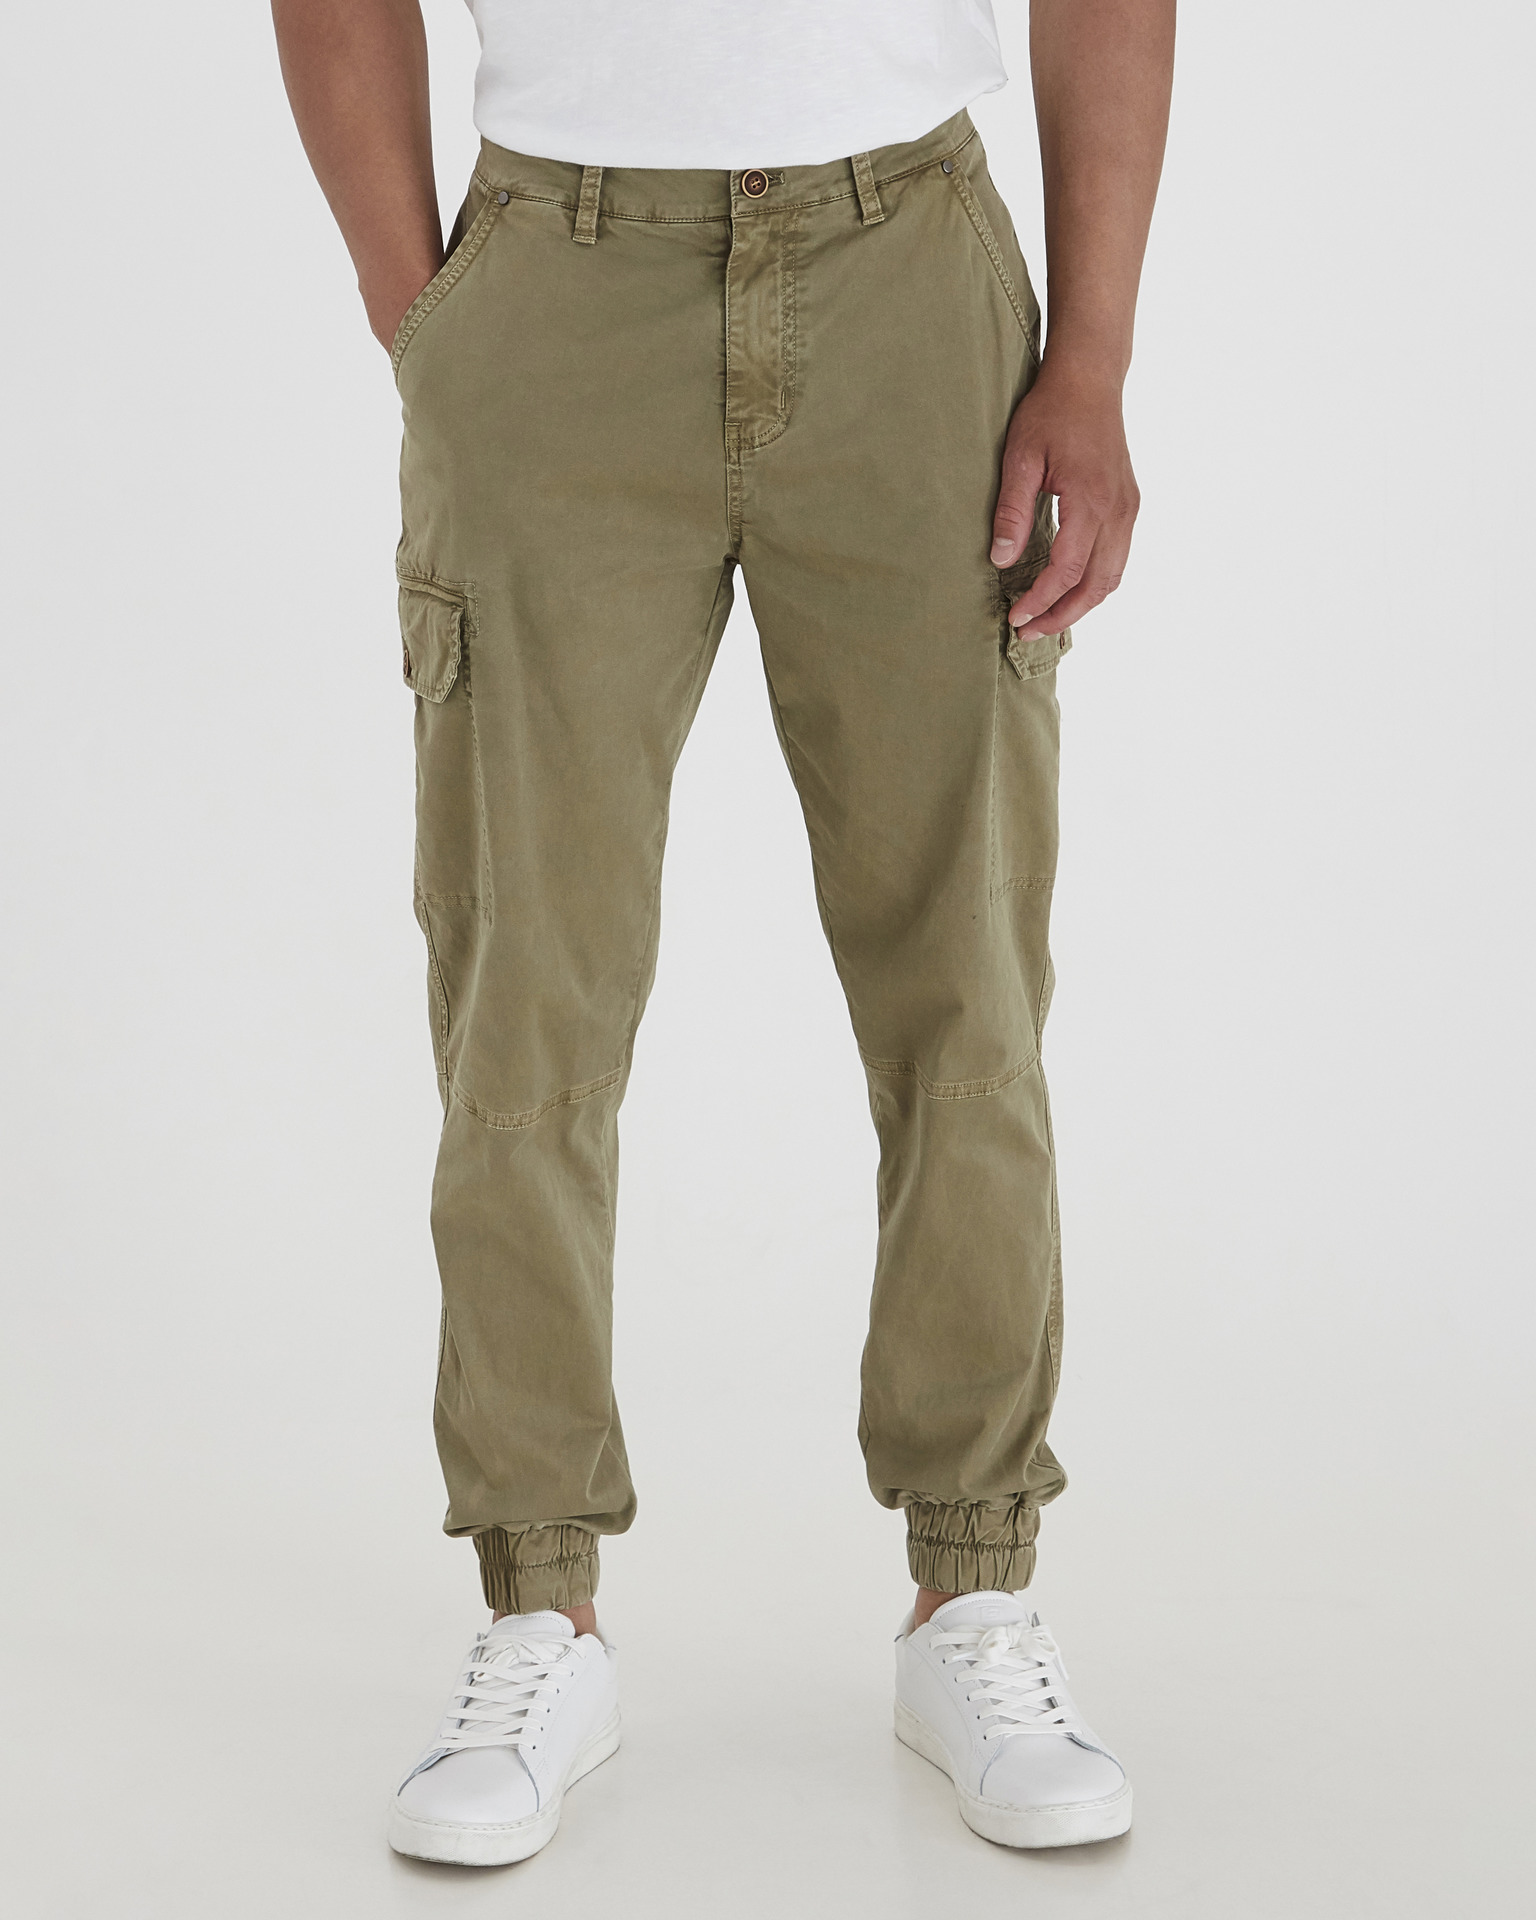 Fotografie Khaki kalhoty s kapsami Blend - XS (28/32)